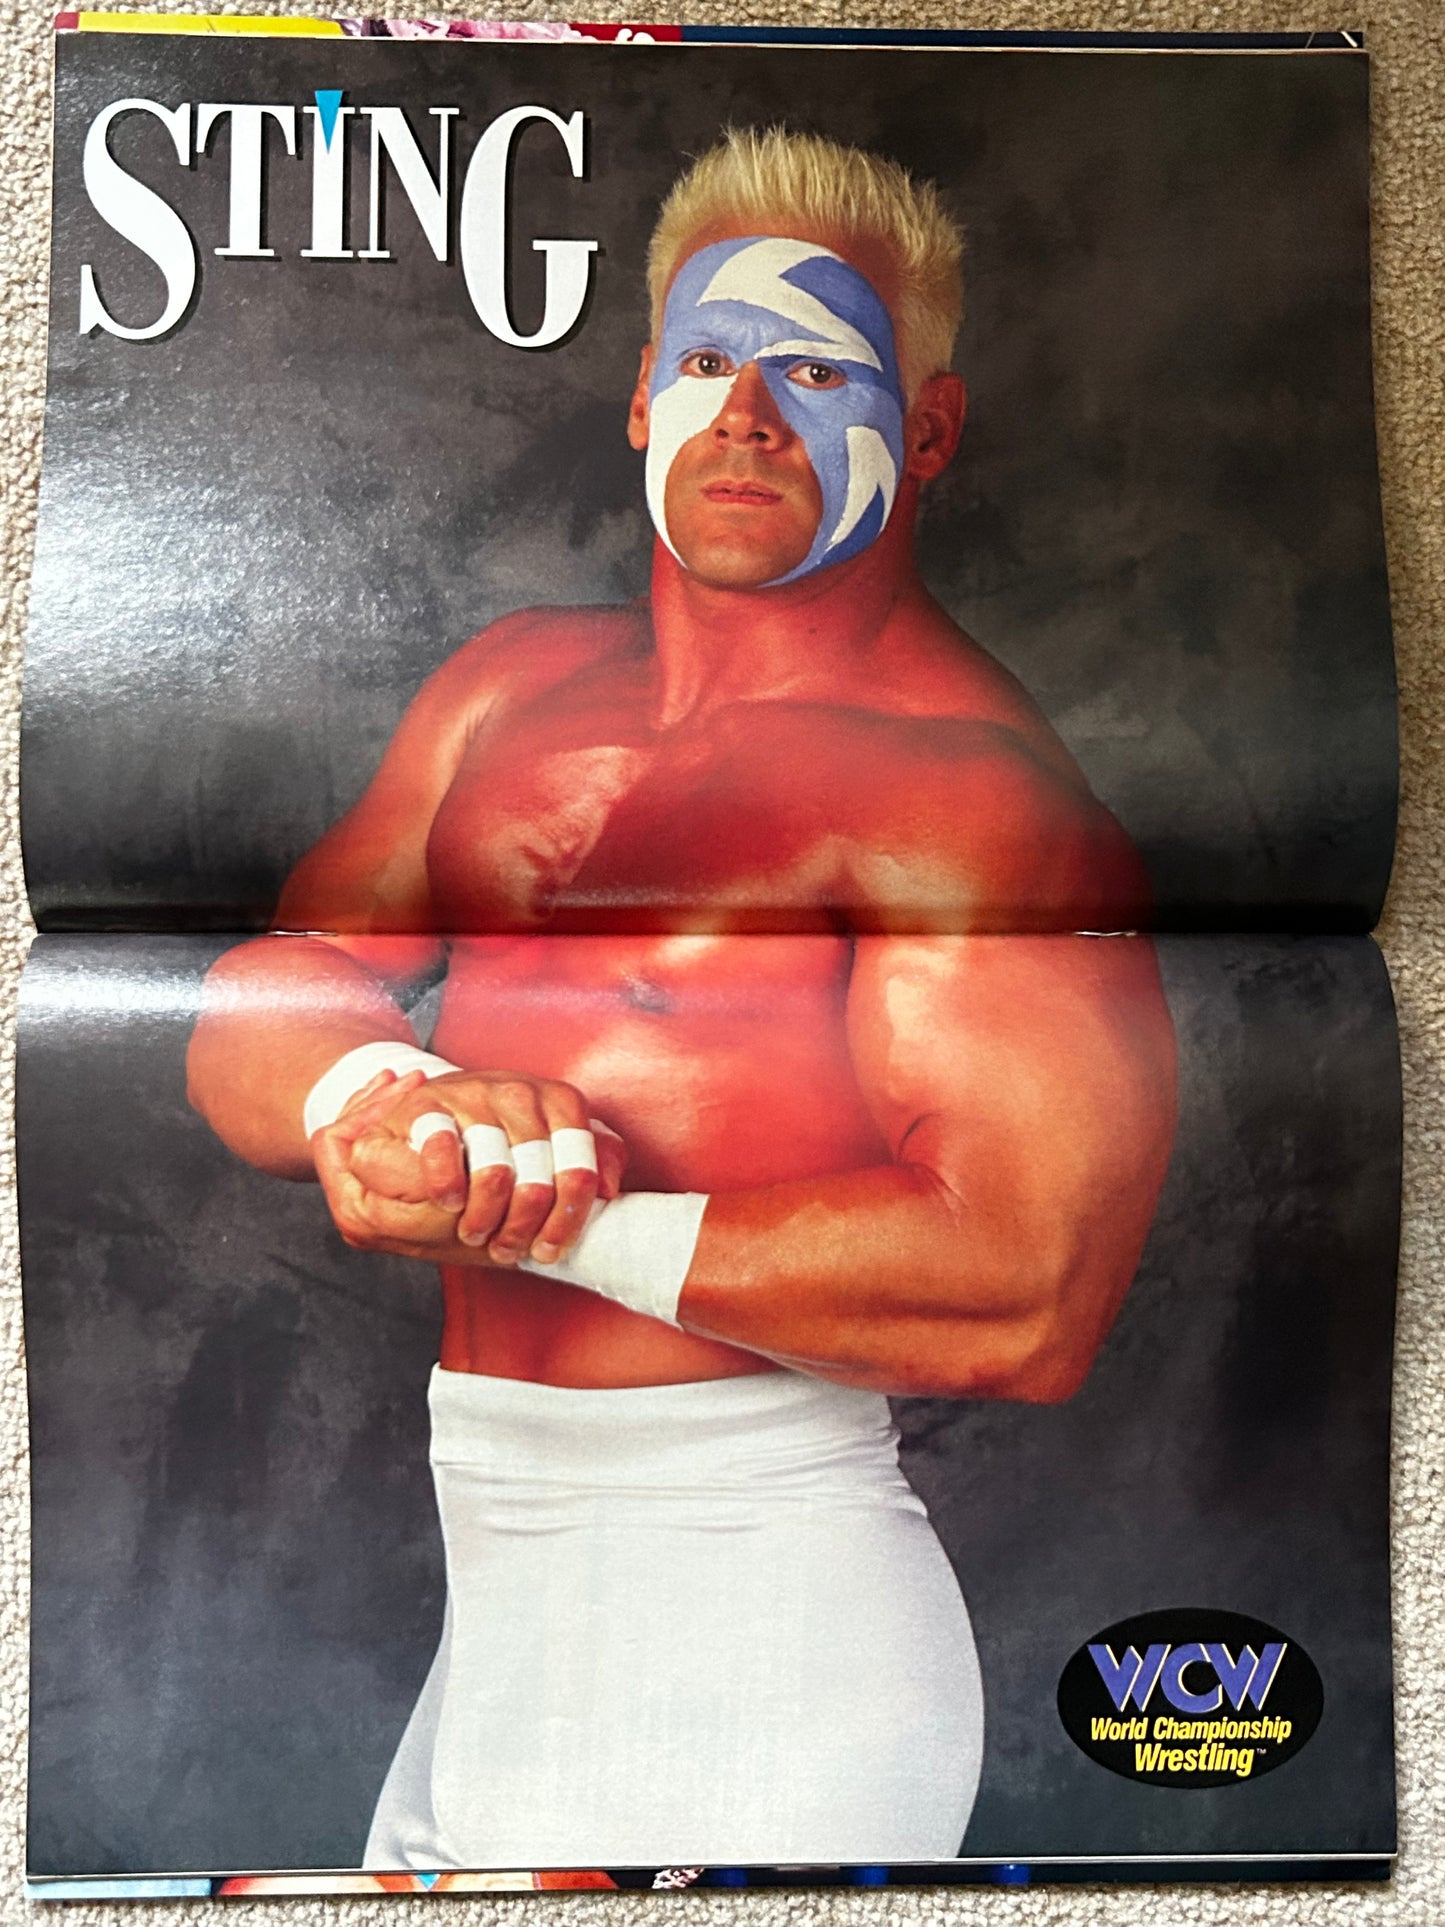 WCW Magazine October 1995 Issue 8